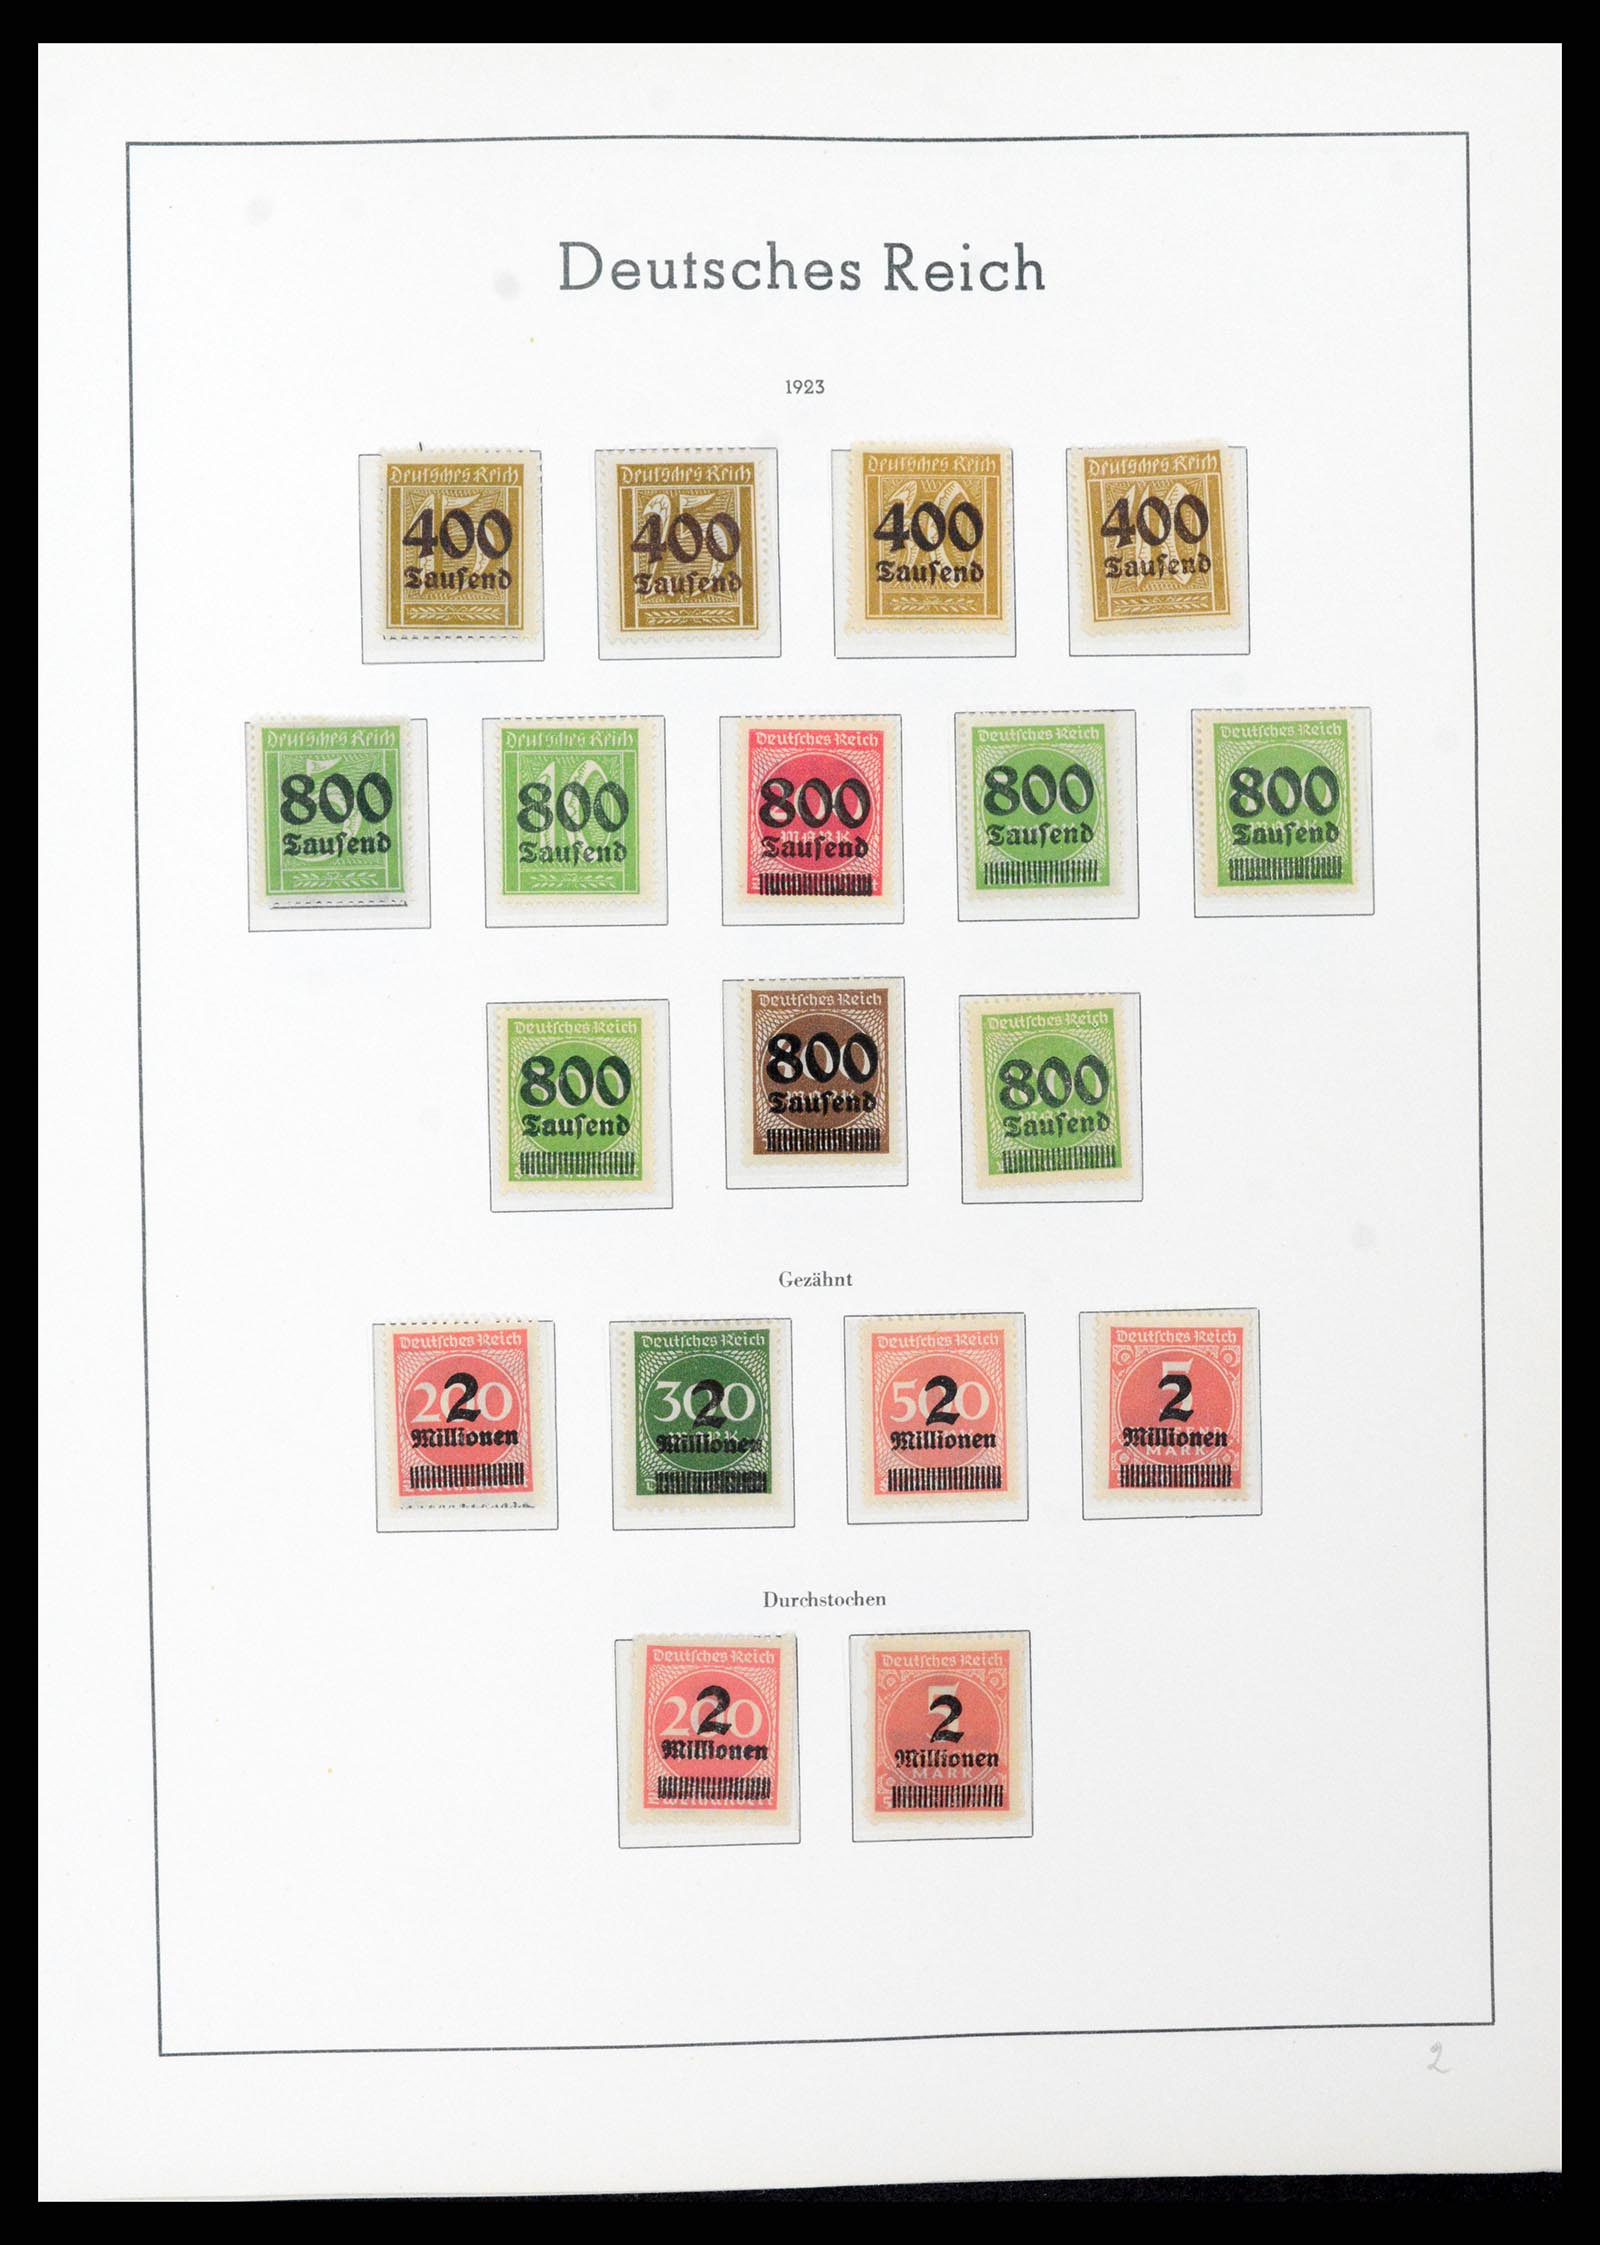 37589 029 - Stamp collection 37589 German Reich 1872-1945.